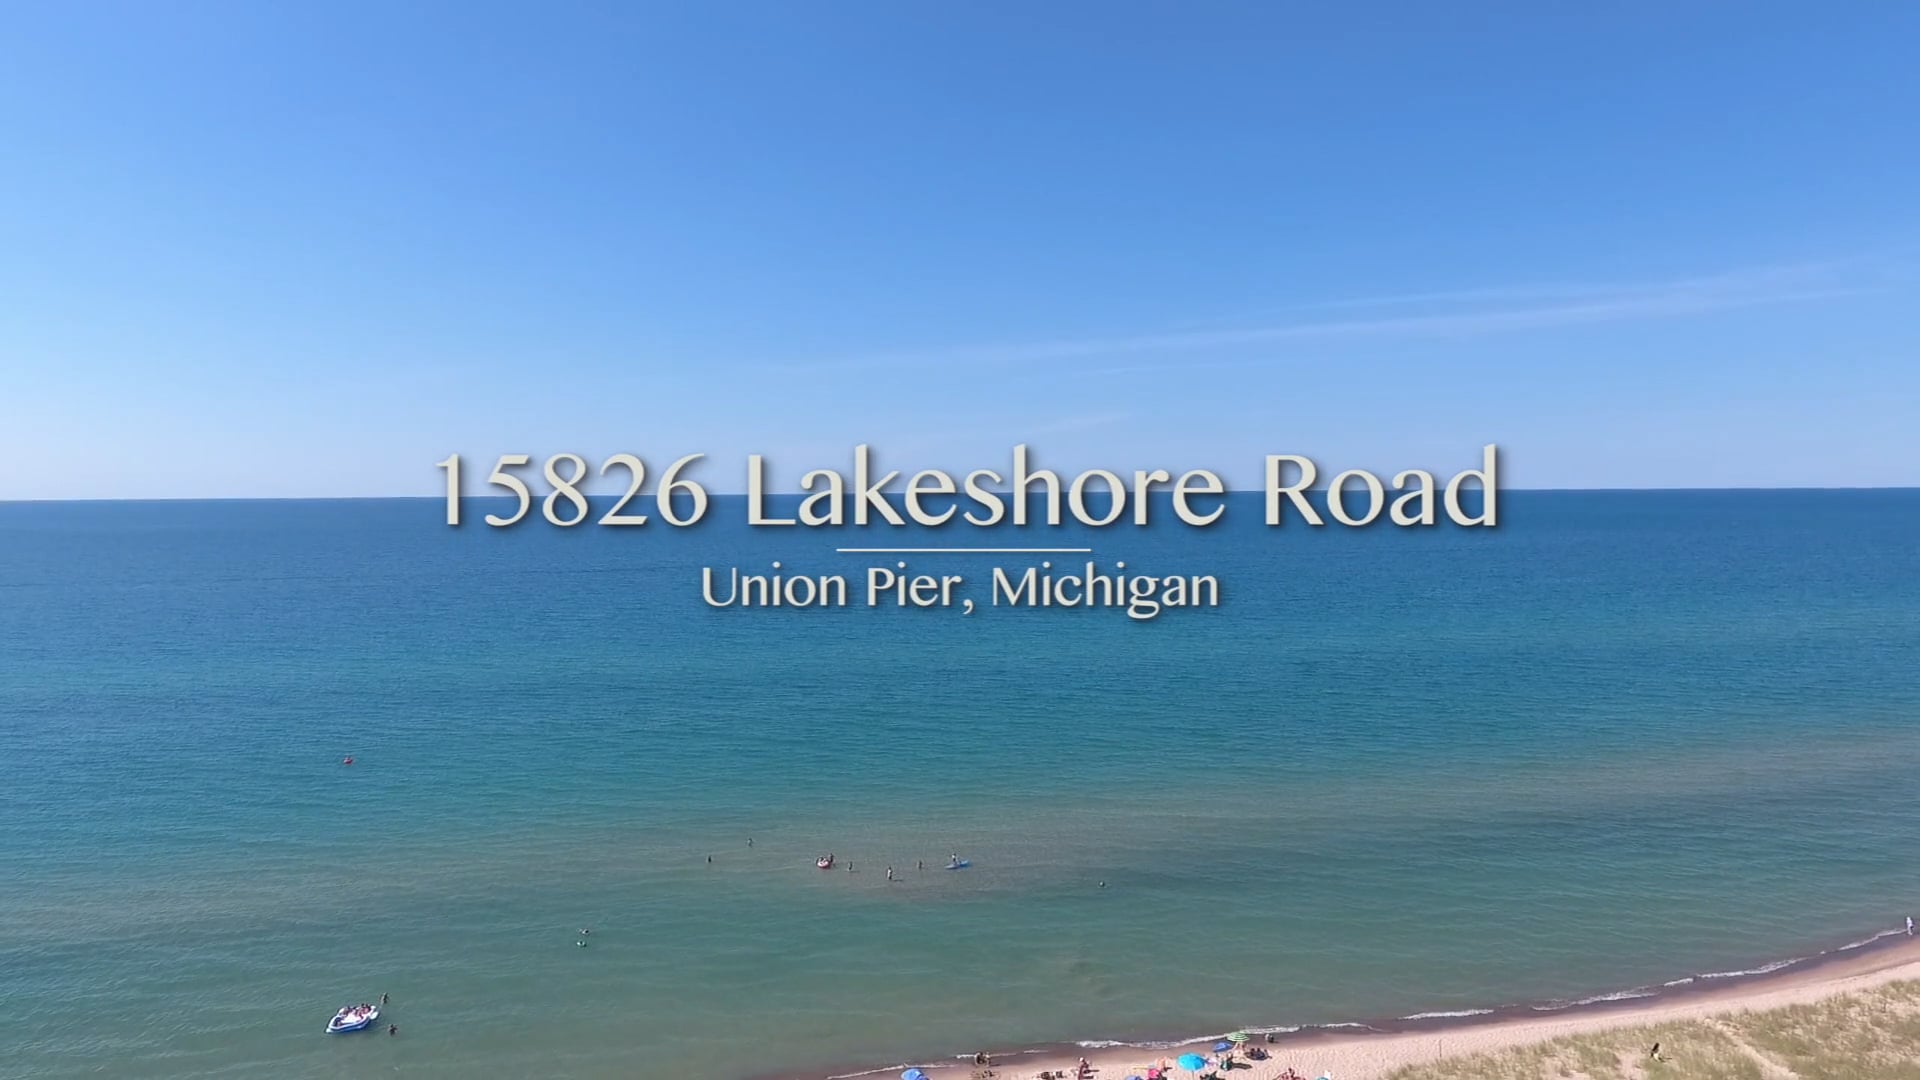 15826 Lakeshore Road Union Pier Michigan On Vimeo